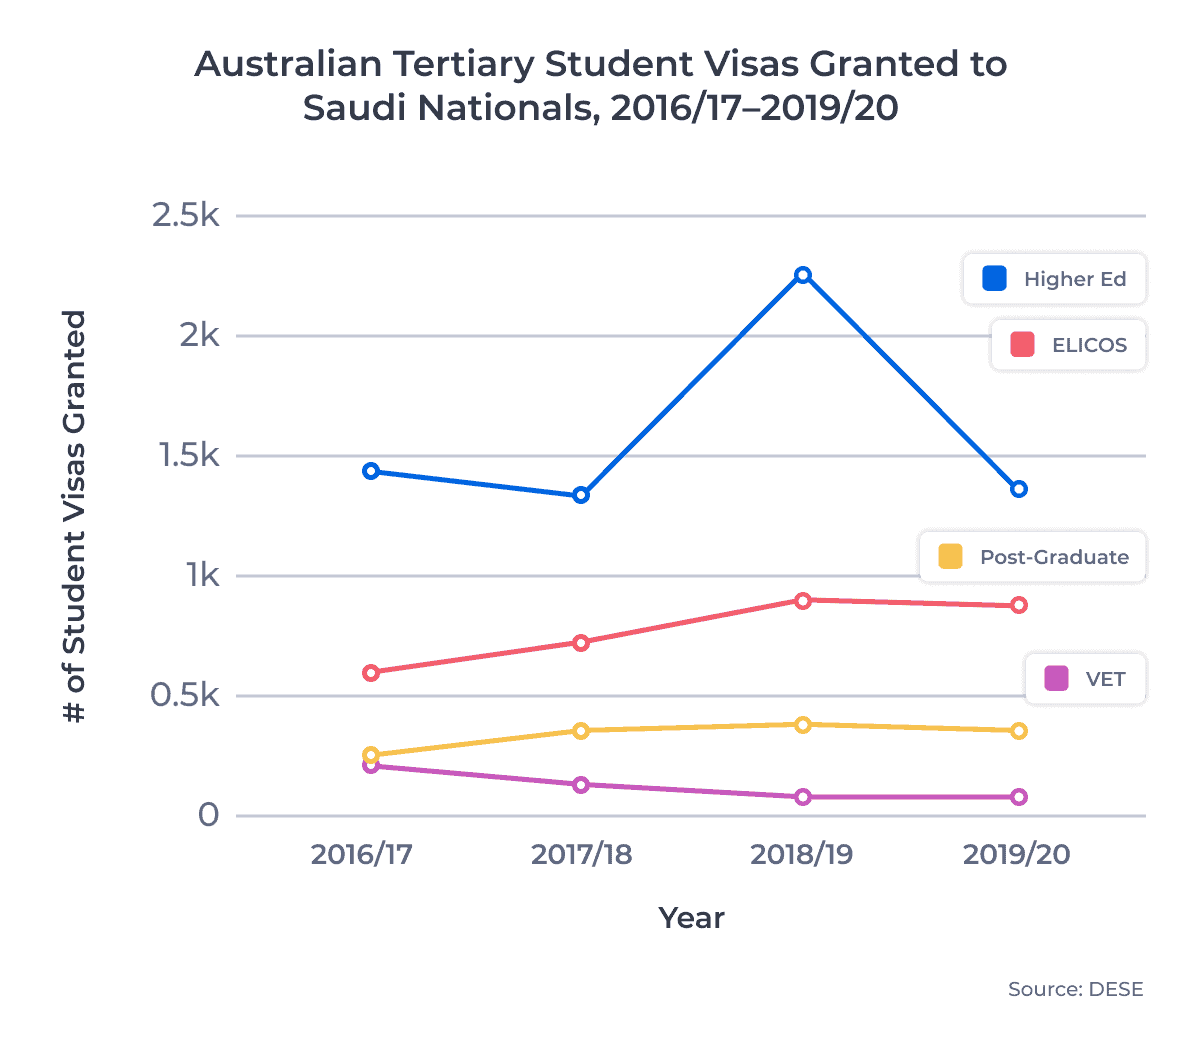 Australian Tertiary Student Visas Granted to Saudi Nationals, 2016/17-2019/20